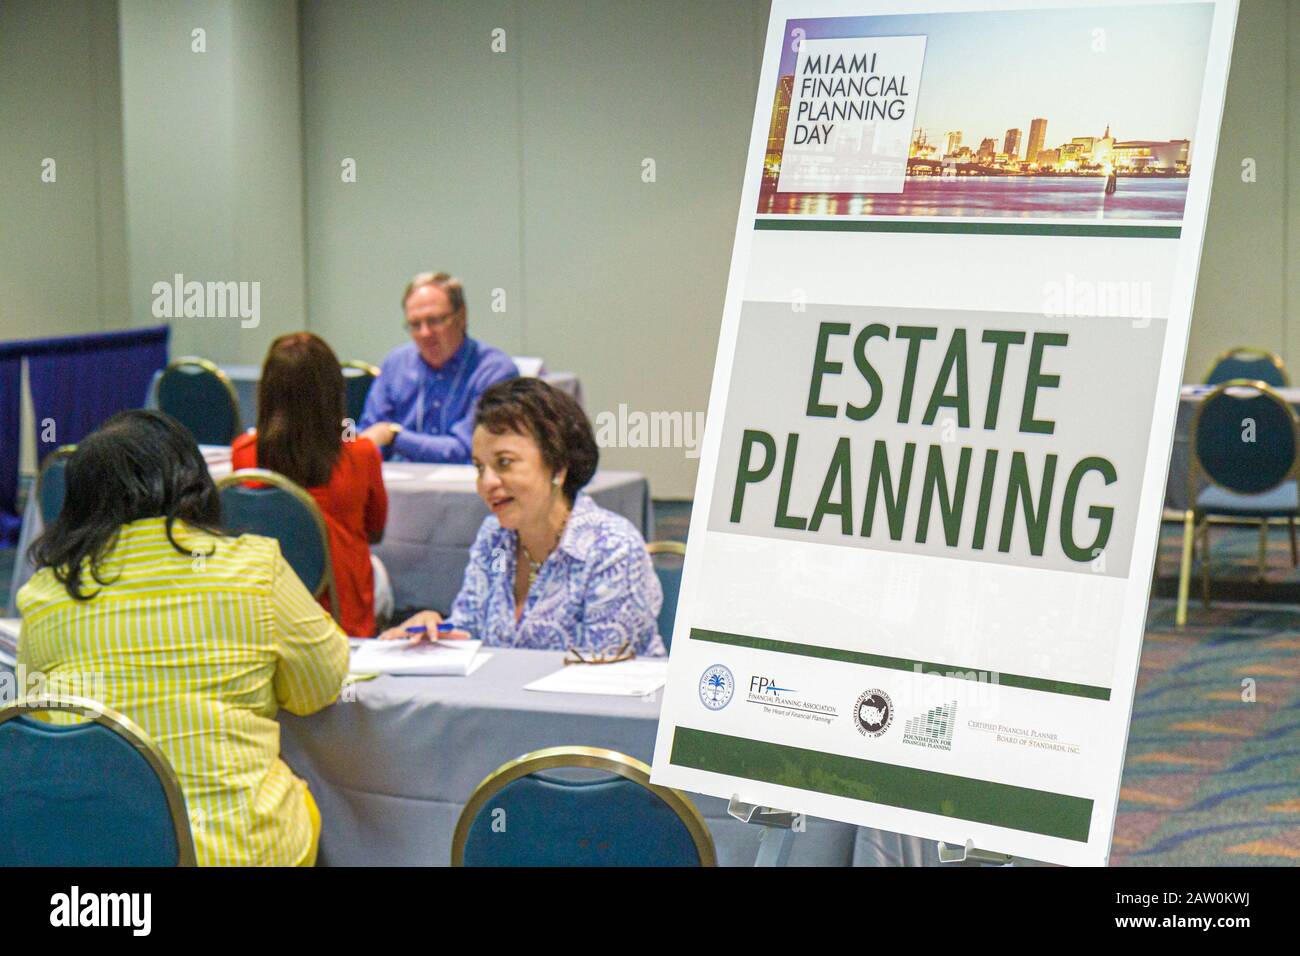 Miami Florida,James L. Knight Convention Center,Miami Financial Planning Day,conseils gratuits,planificateurs guidanceal,signe,planification successorale,femme femme femme,F Banque D'Images